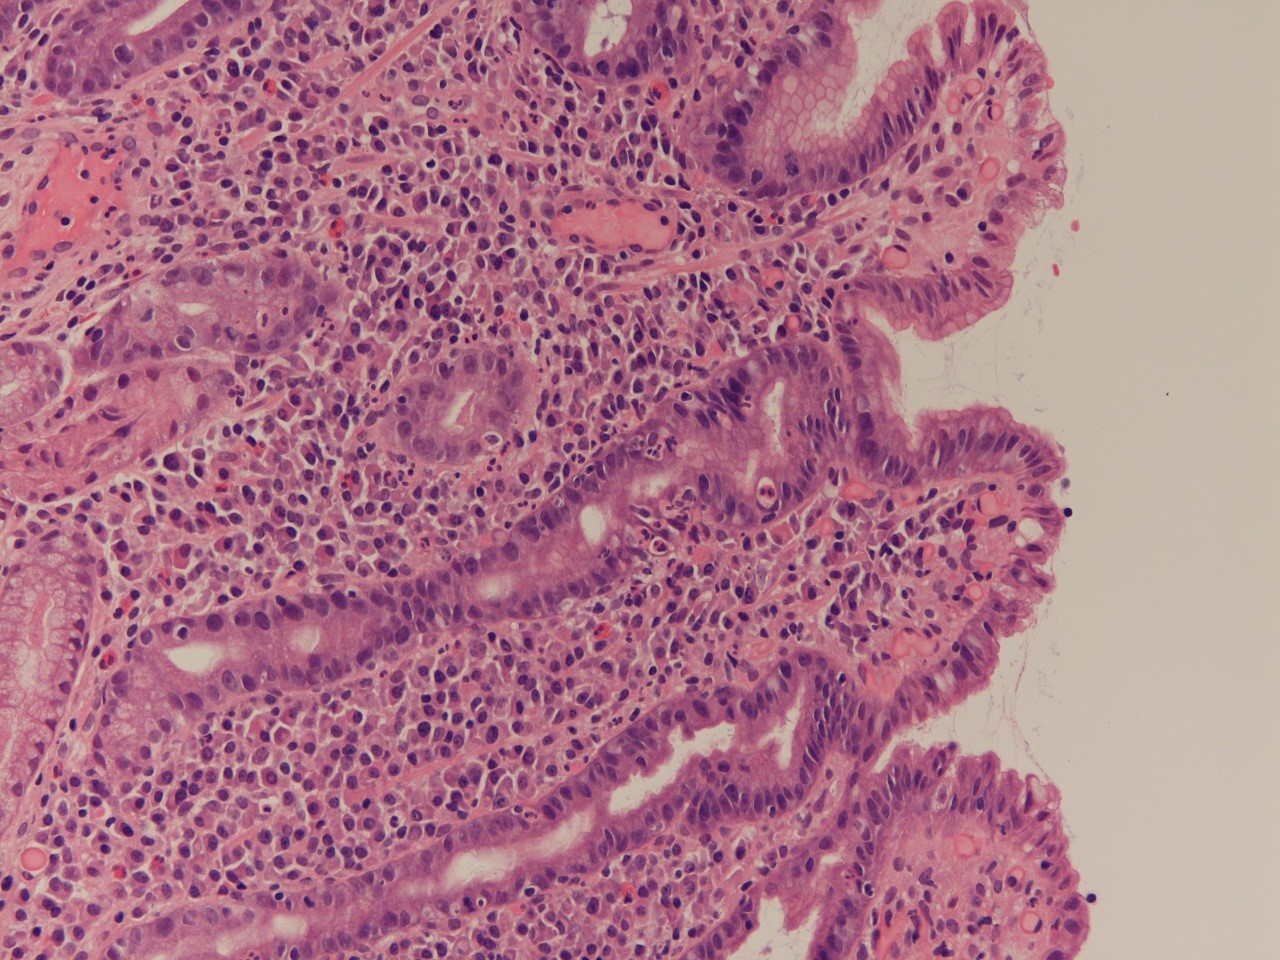 Helicobacter pylori gastritis